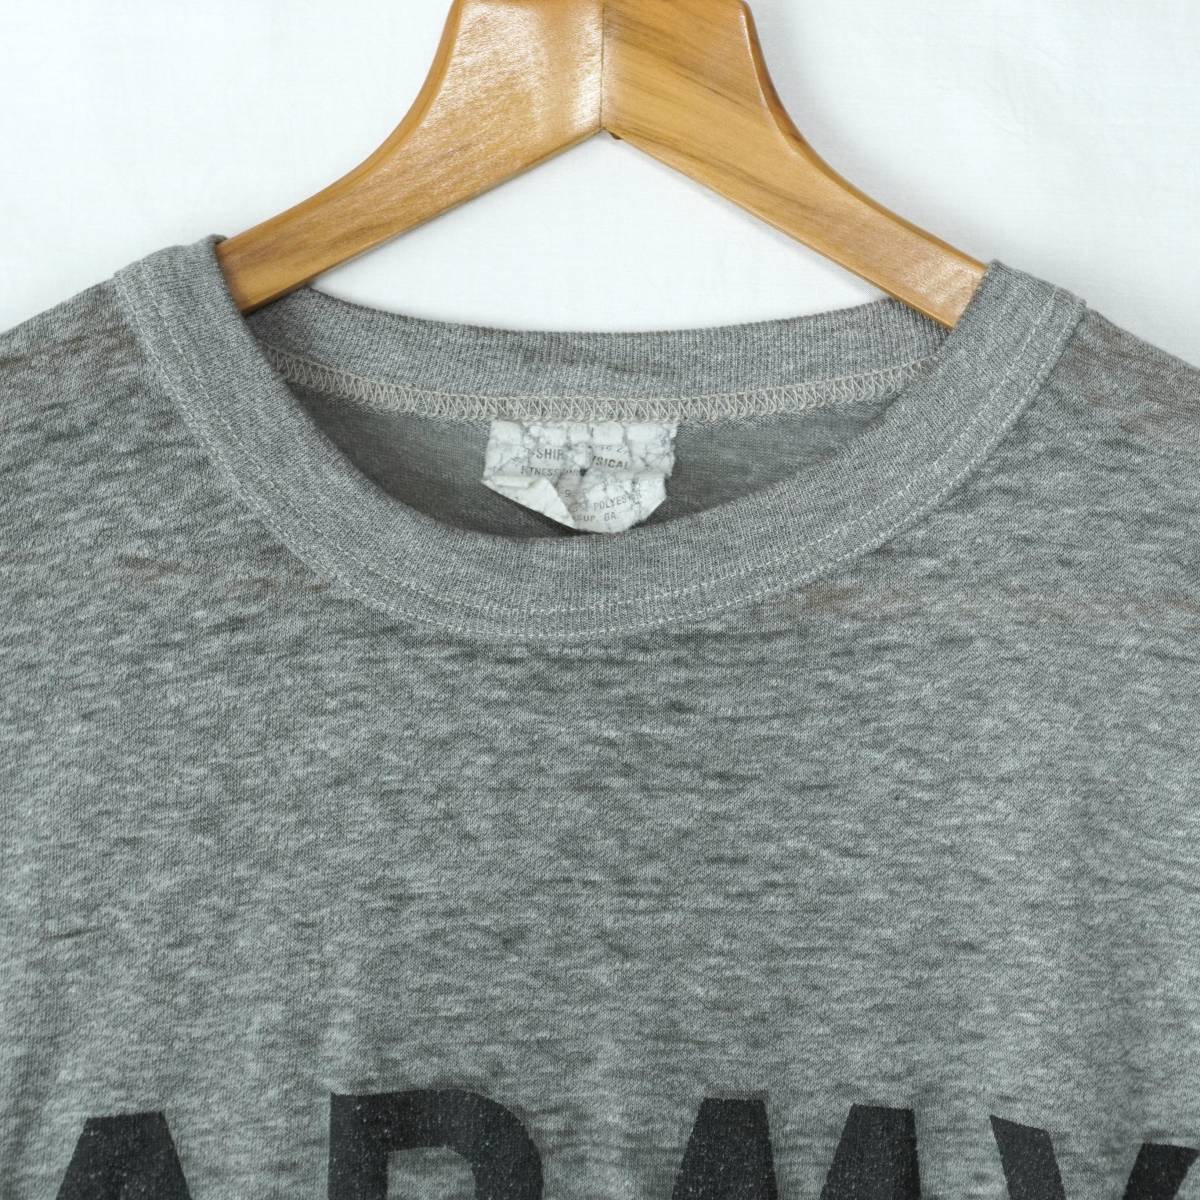 US ARMY T-Shirts 1990s MEDIUM T182 Made in USA America армия футболка милитари футболка 1990 годы America производства 